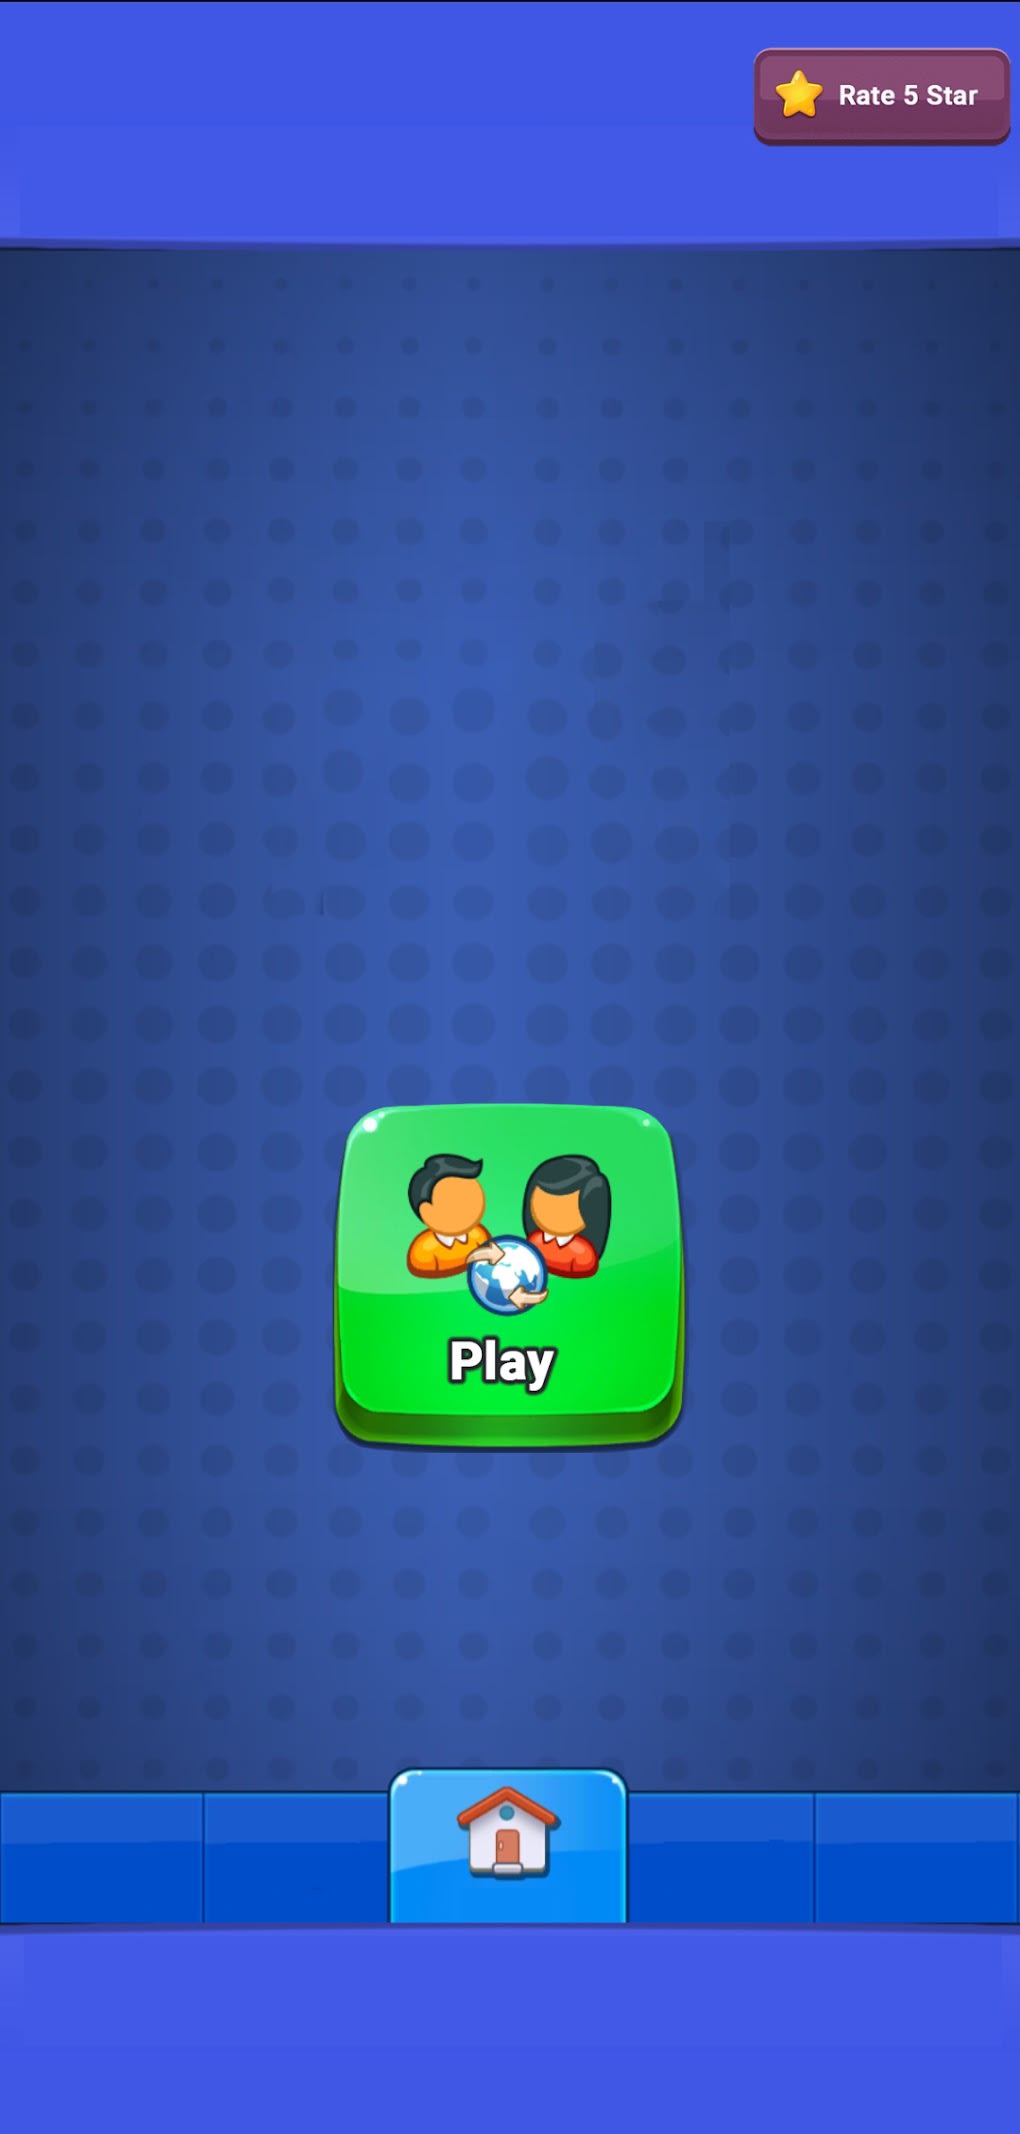 Ludo Online: Jogo de Tabuleiro – Applications sur Google Play